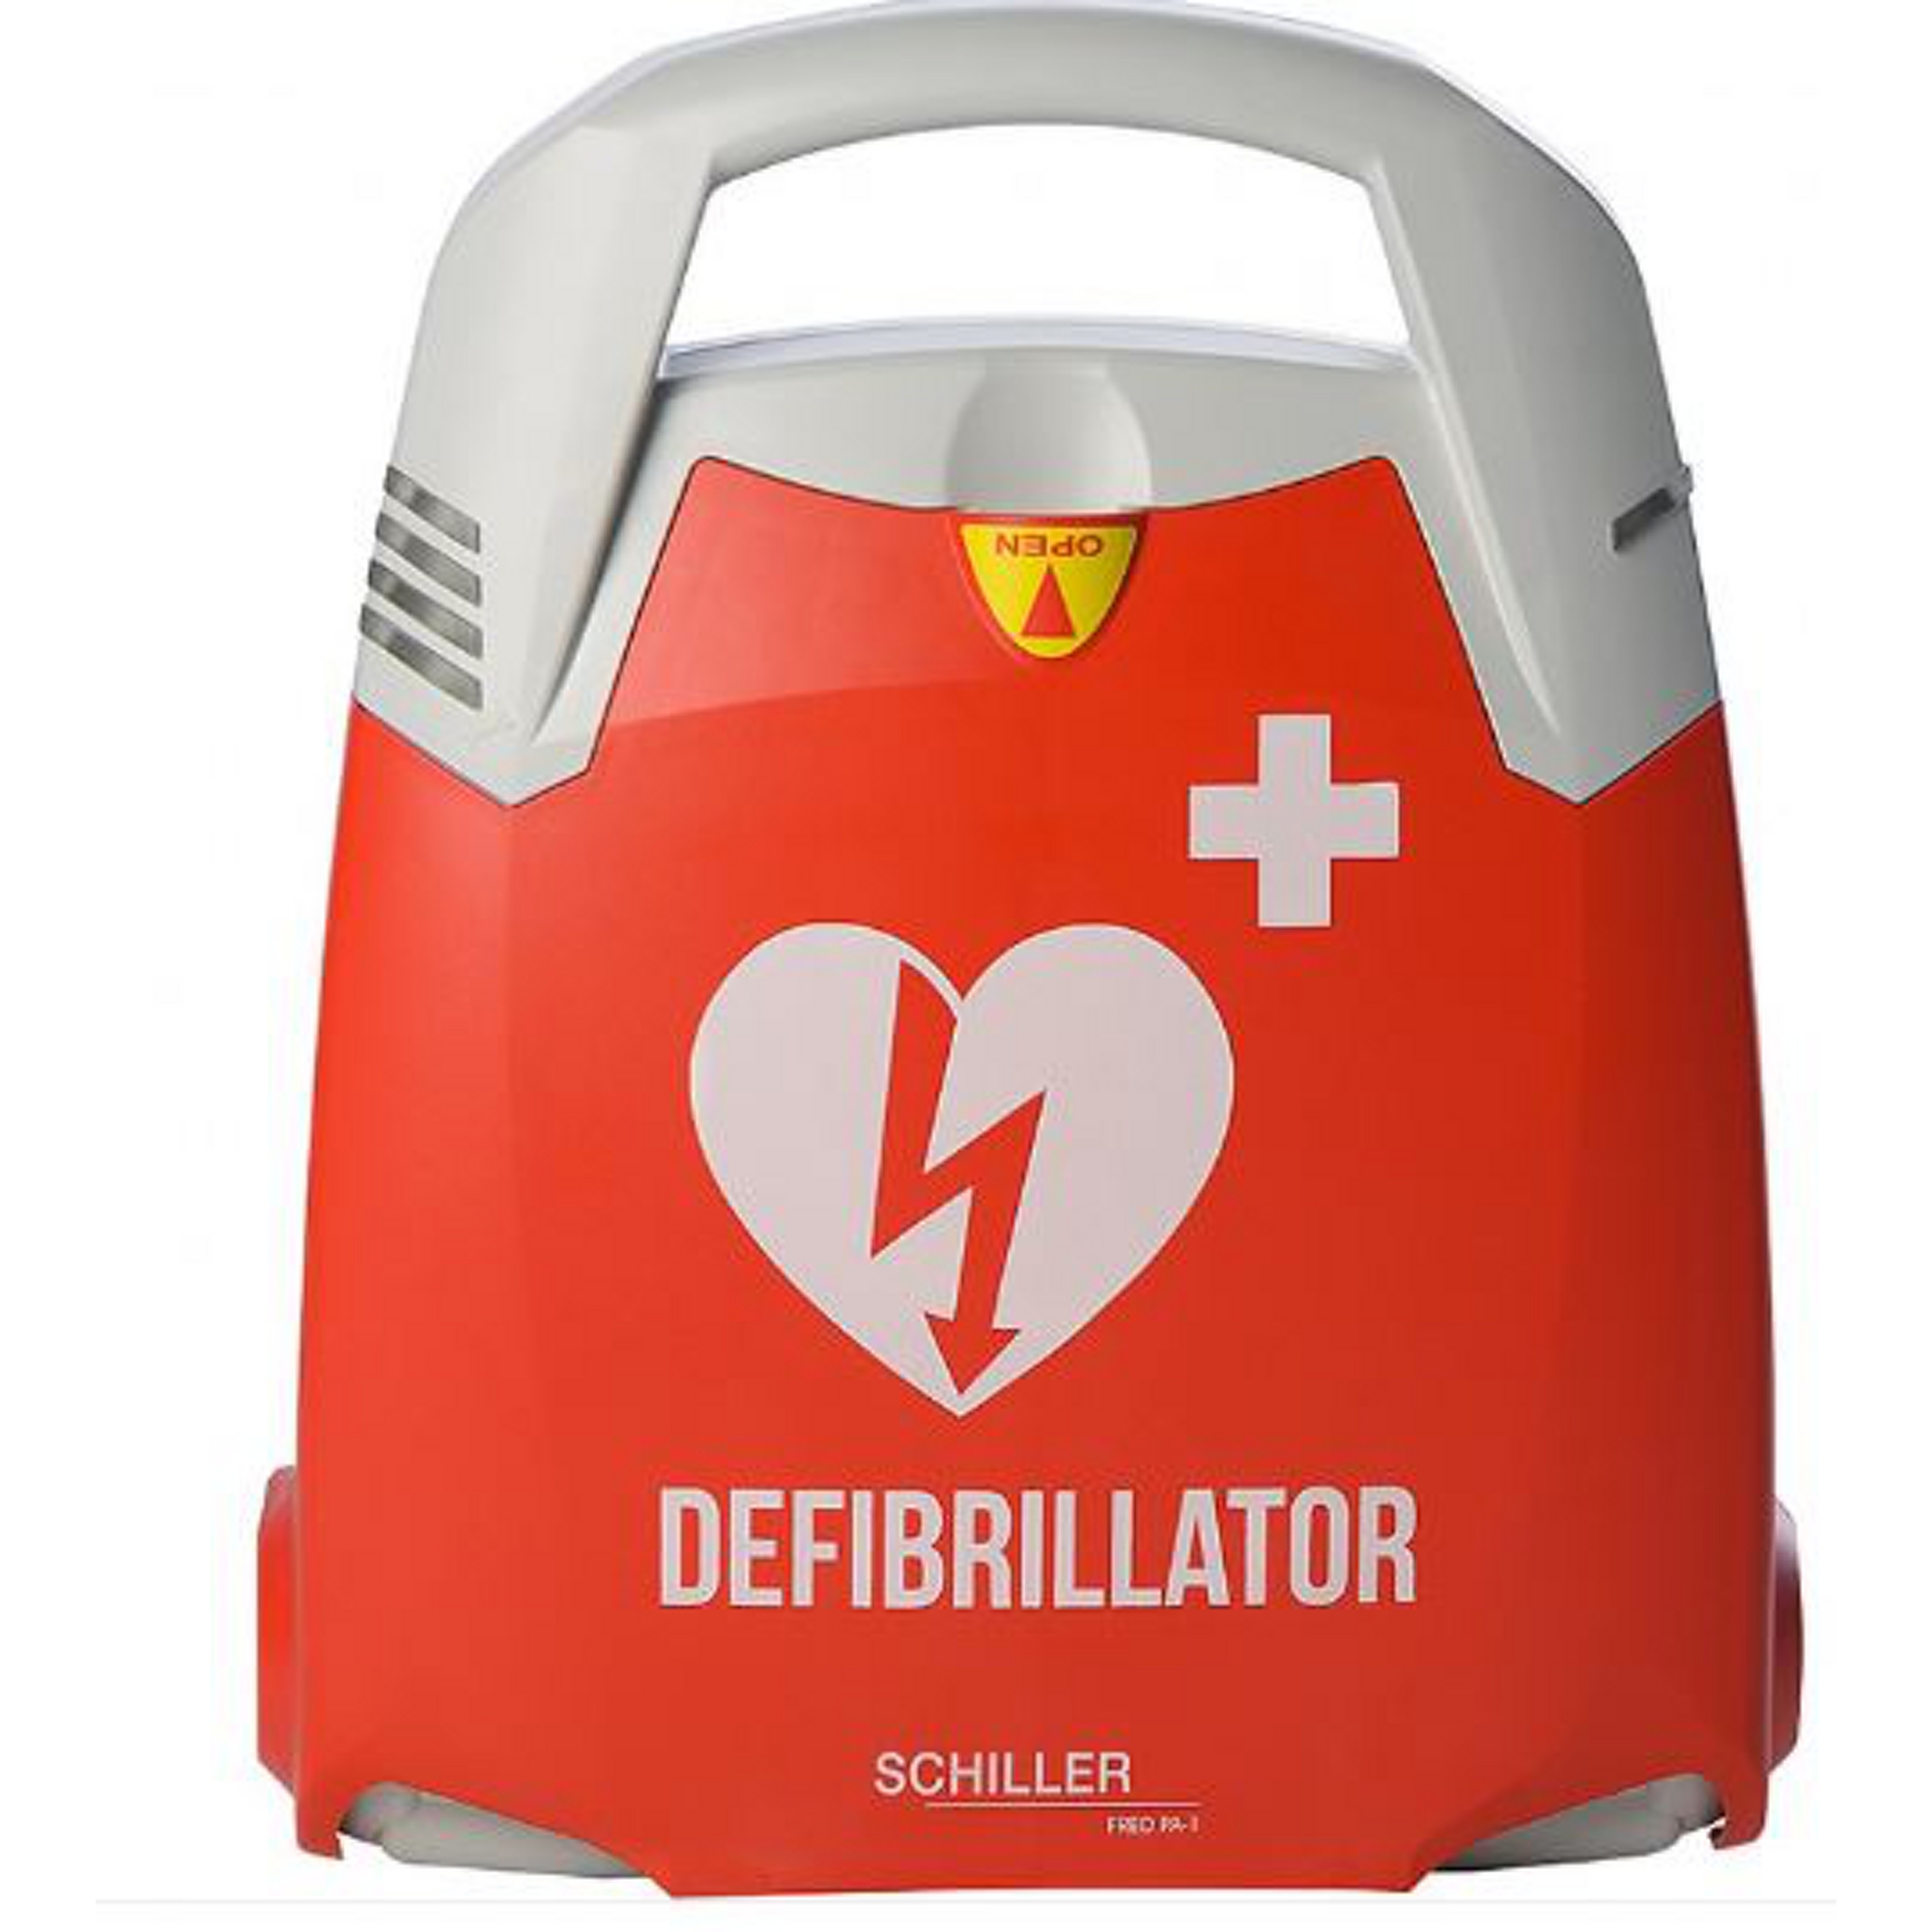 Schiller Public Access Defibrillator 